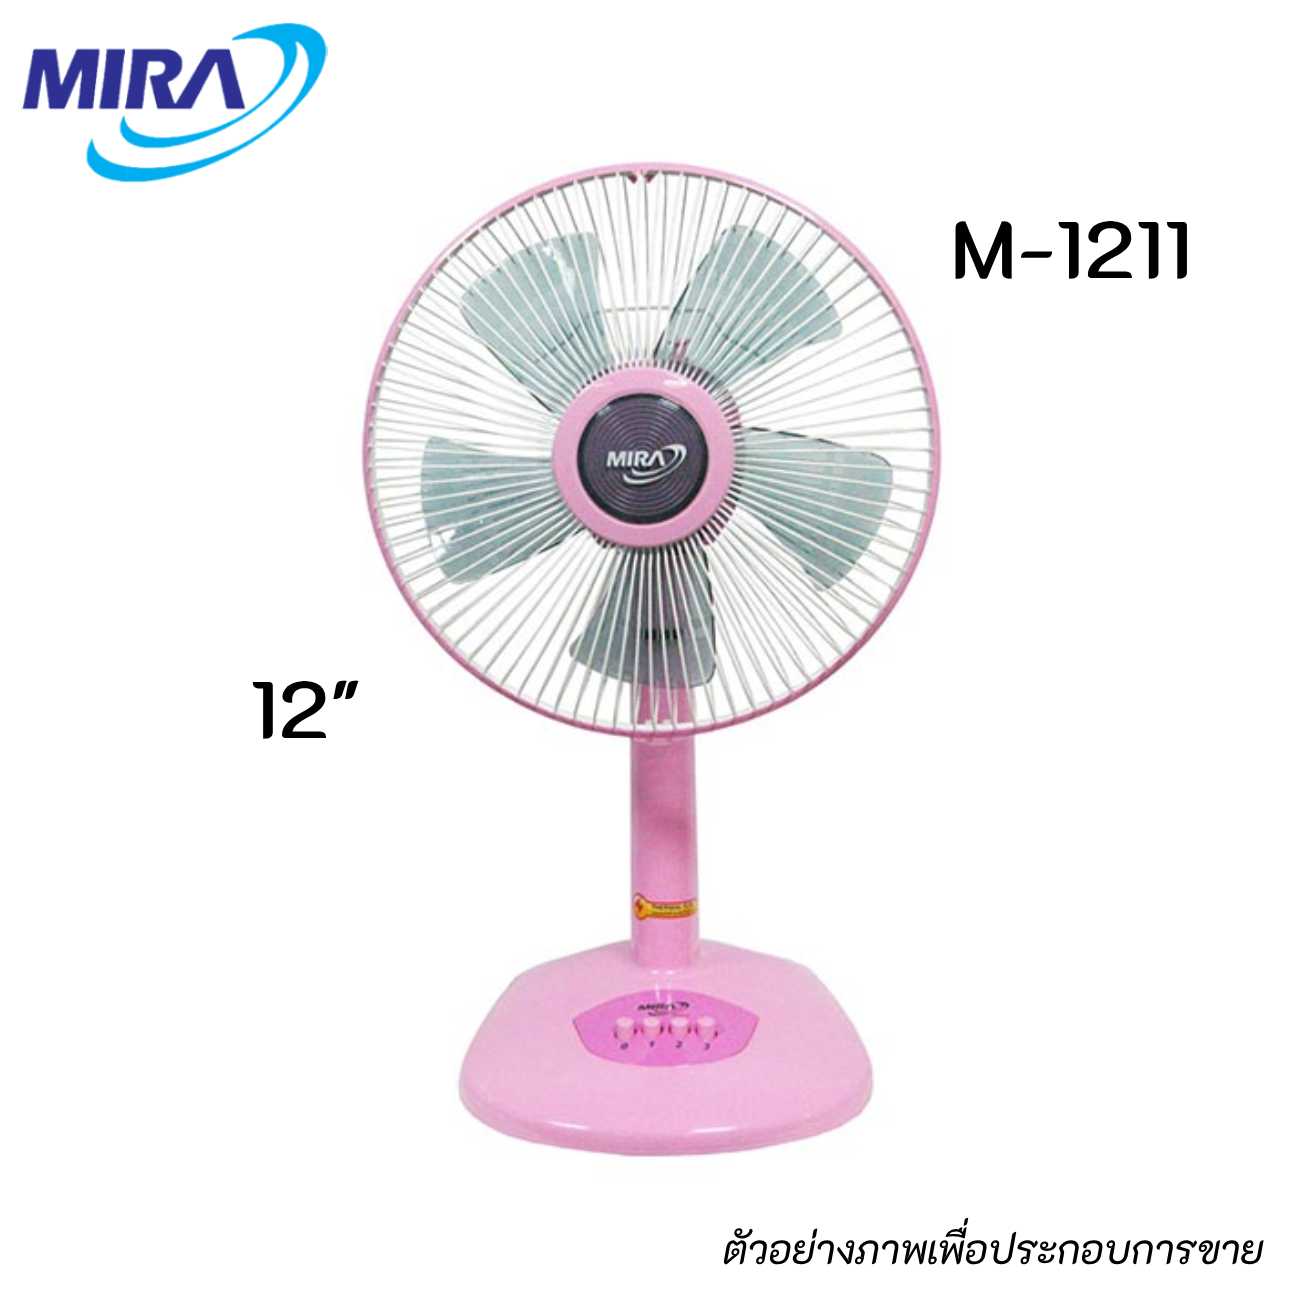 MIRA M-1211 พัดลมตั้งโต๊ะ 12 นิ้ว สีชมพู